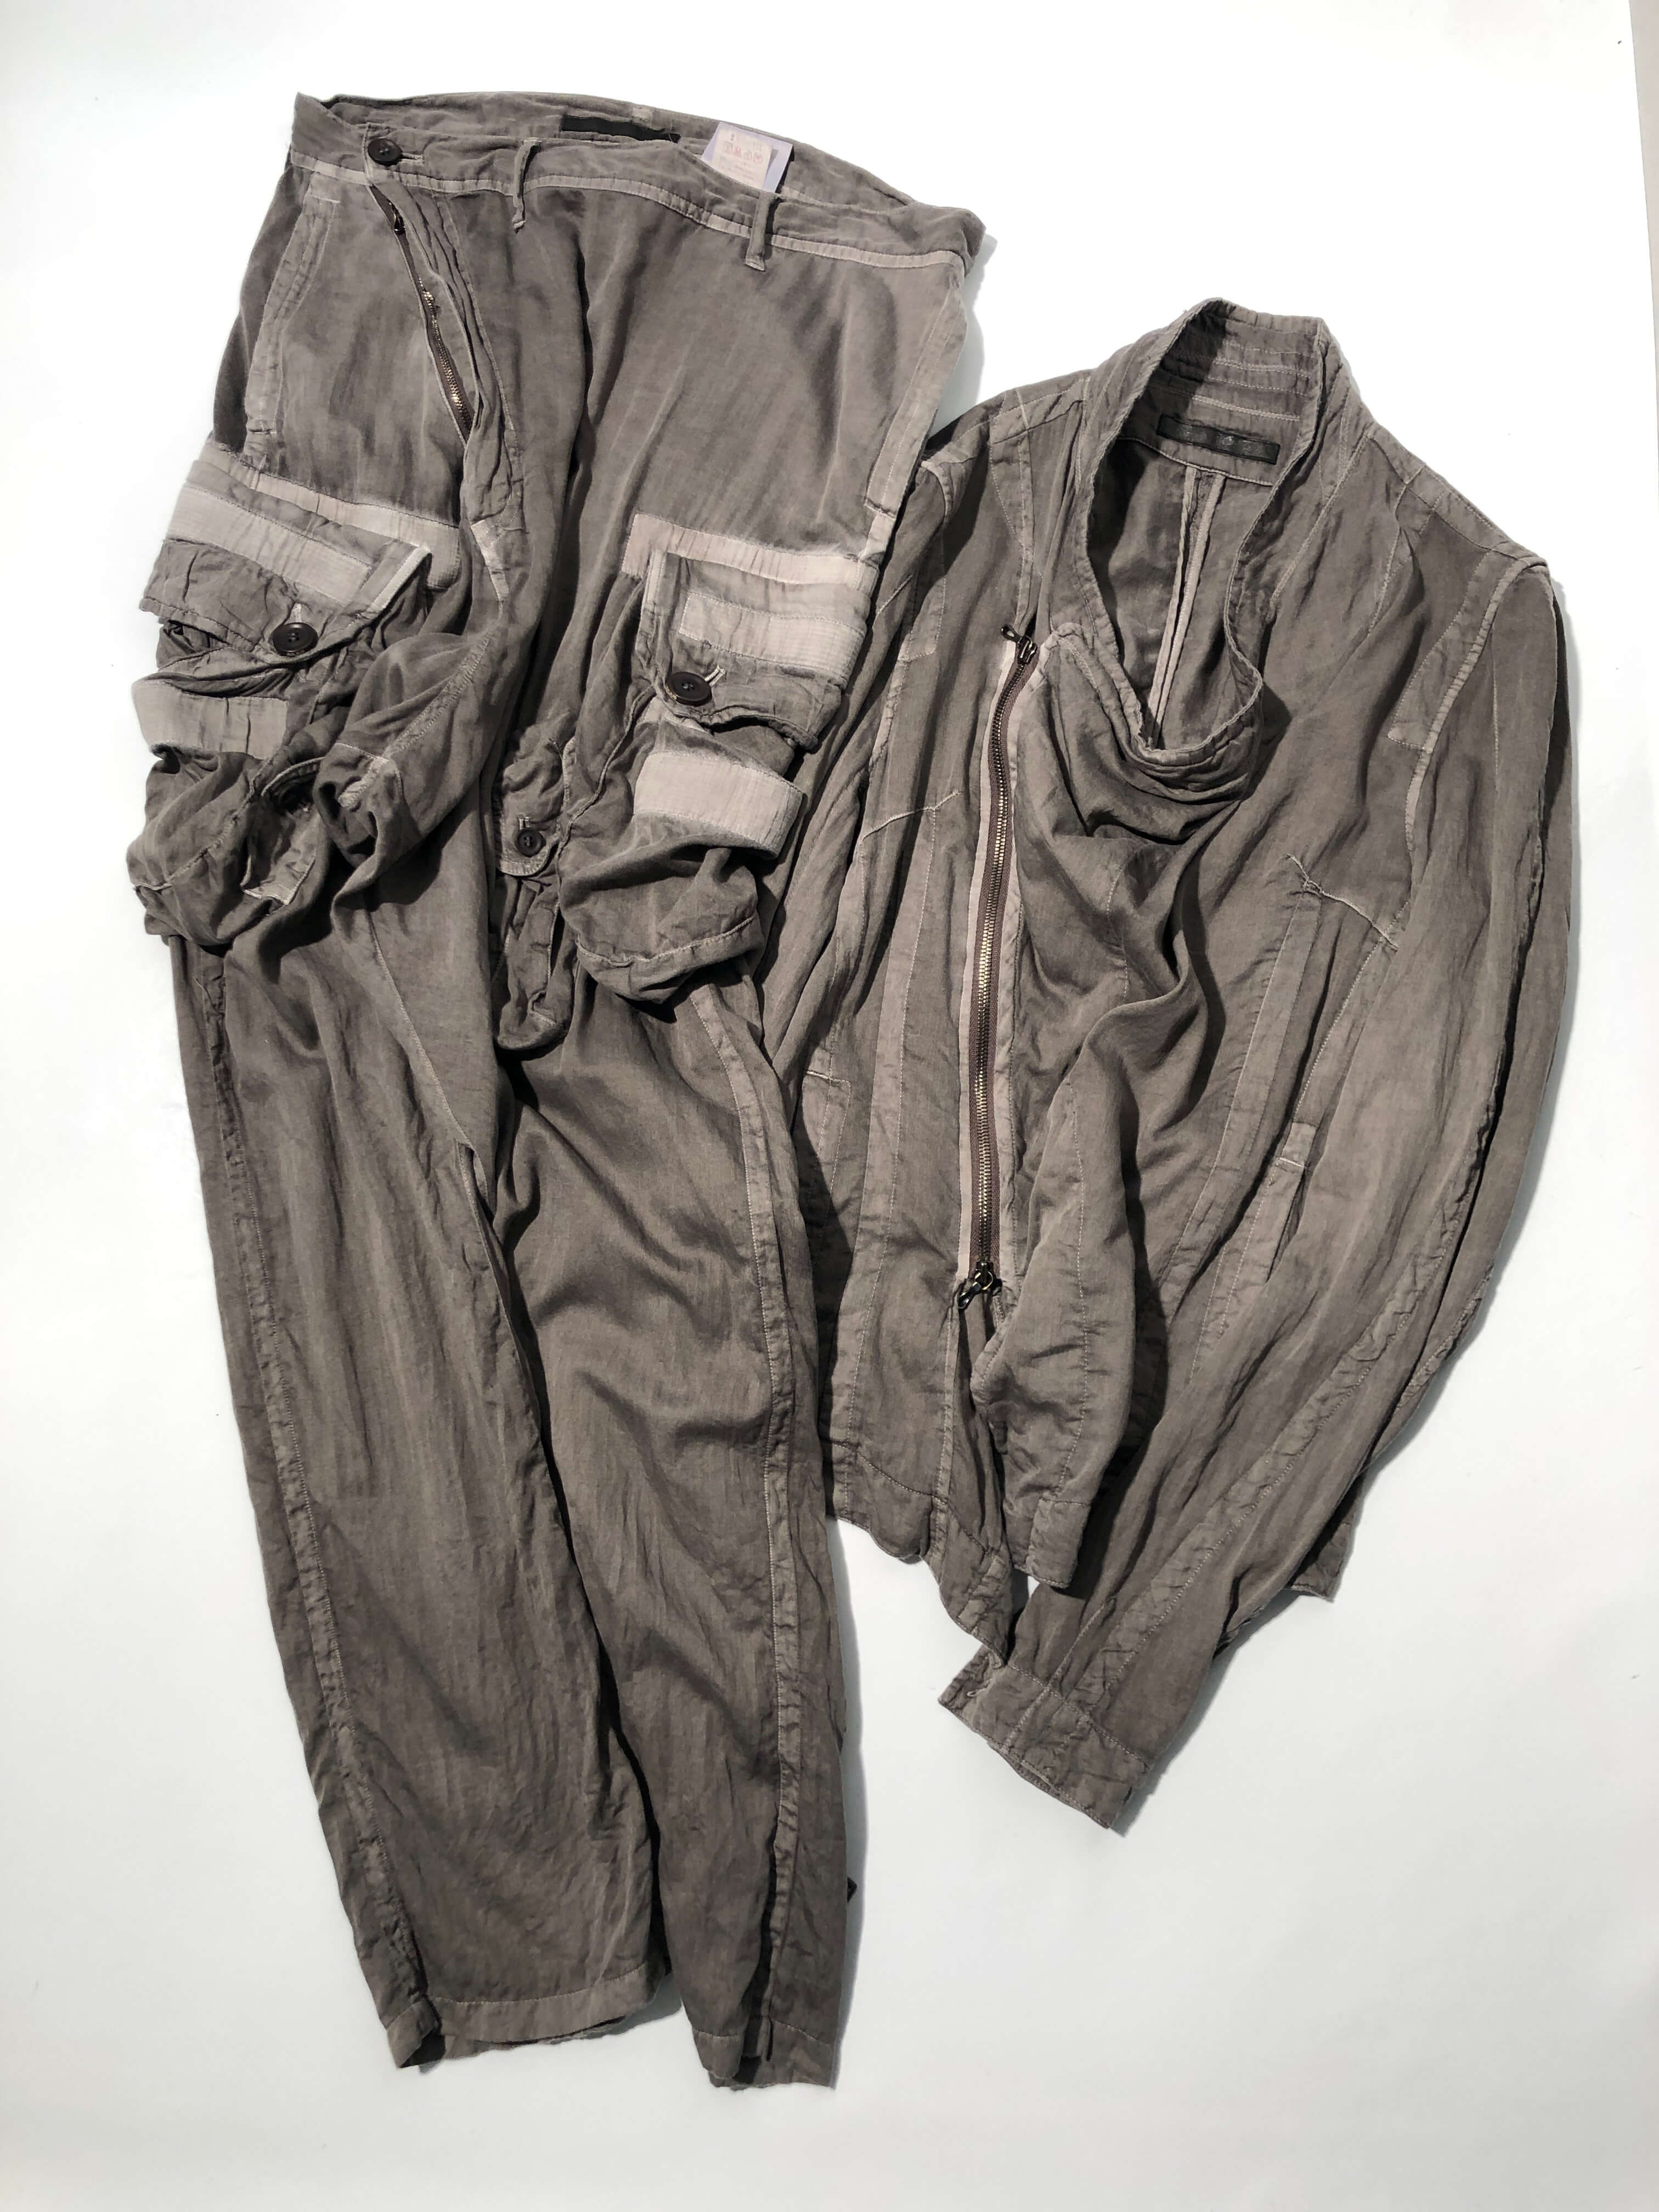 julius 2012 edge; warm gray dyeing suit